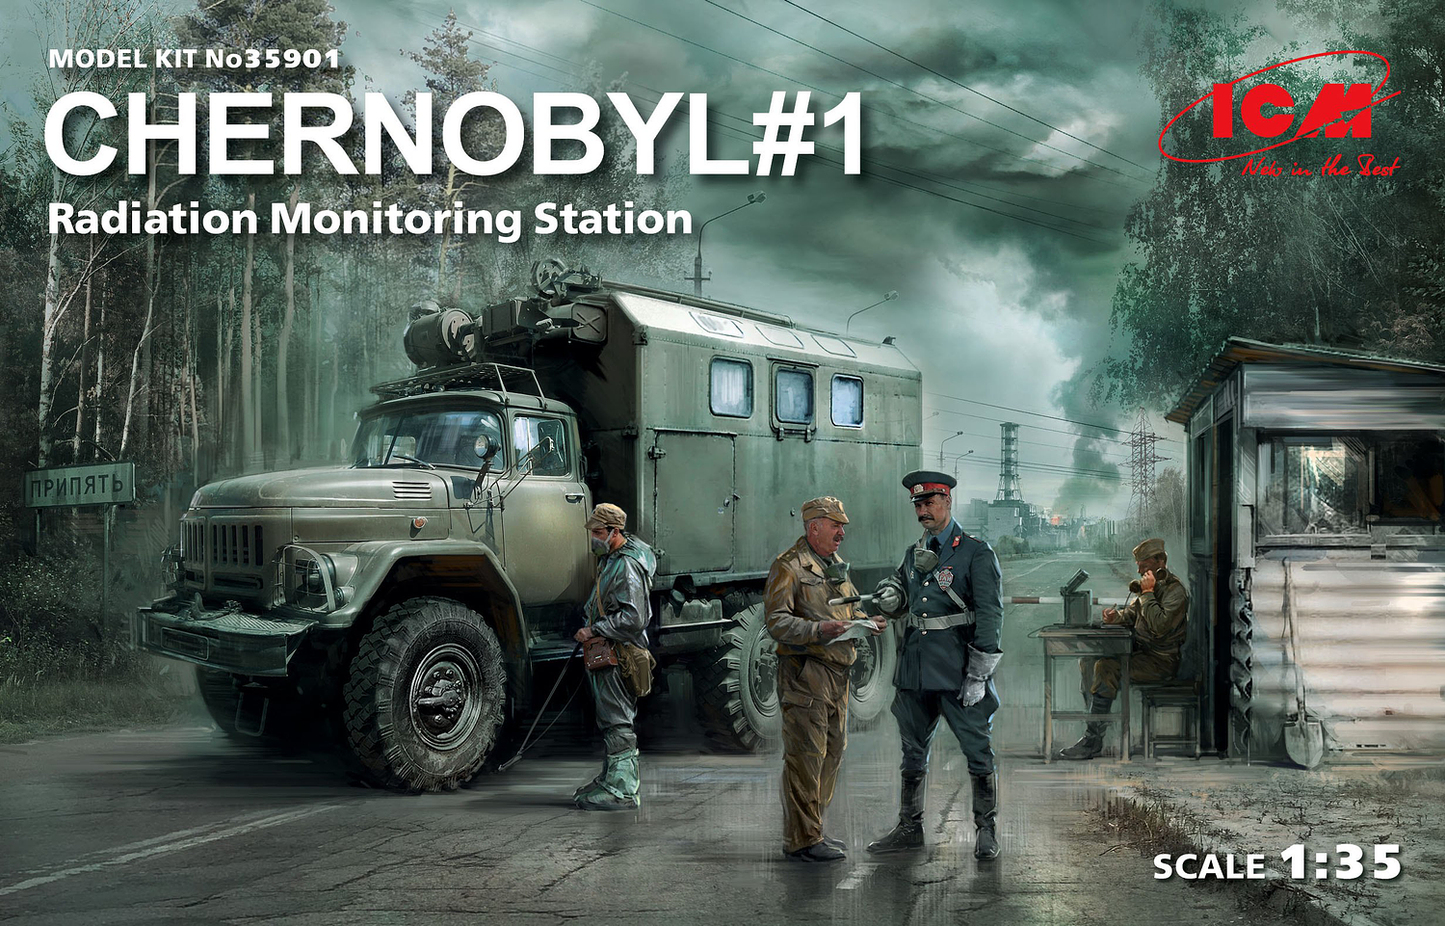 ICM 1:35 Chernobyl #1. Radiation Monitoring Station (ZiL-131KShM Truck & 5 Figures & Diorama Base with Background)